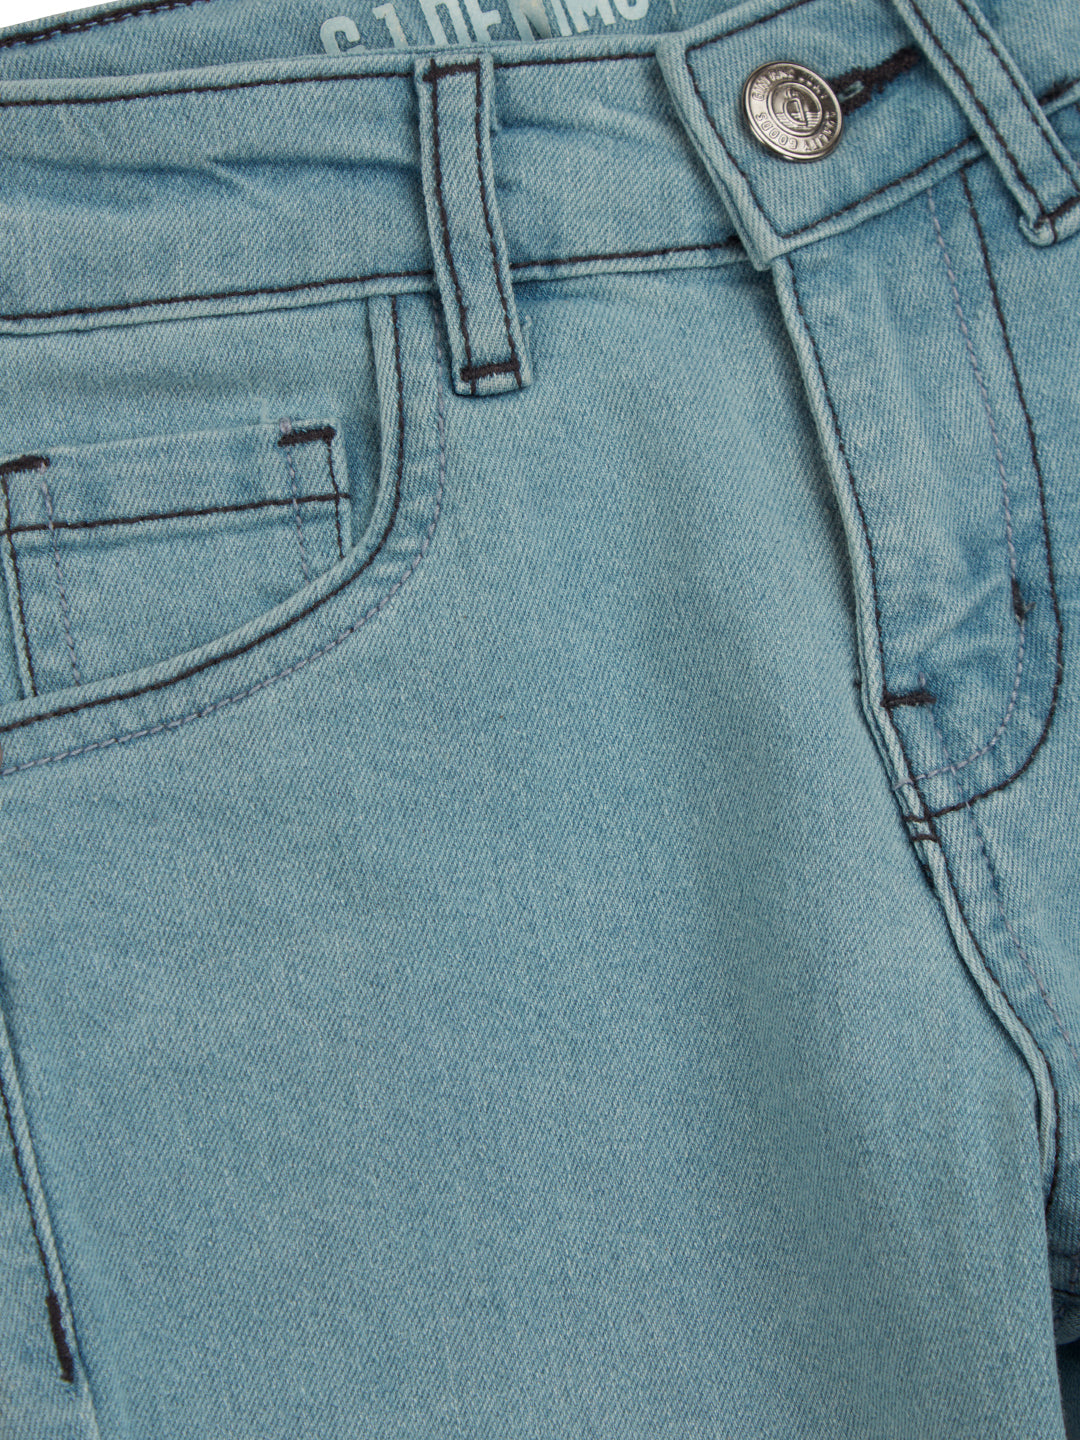 Boys Blue Solid Denim Fixed Waist Jeans